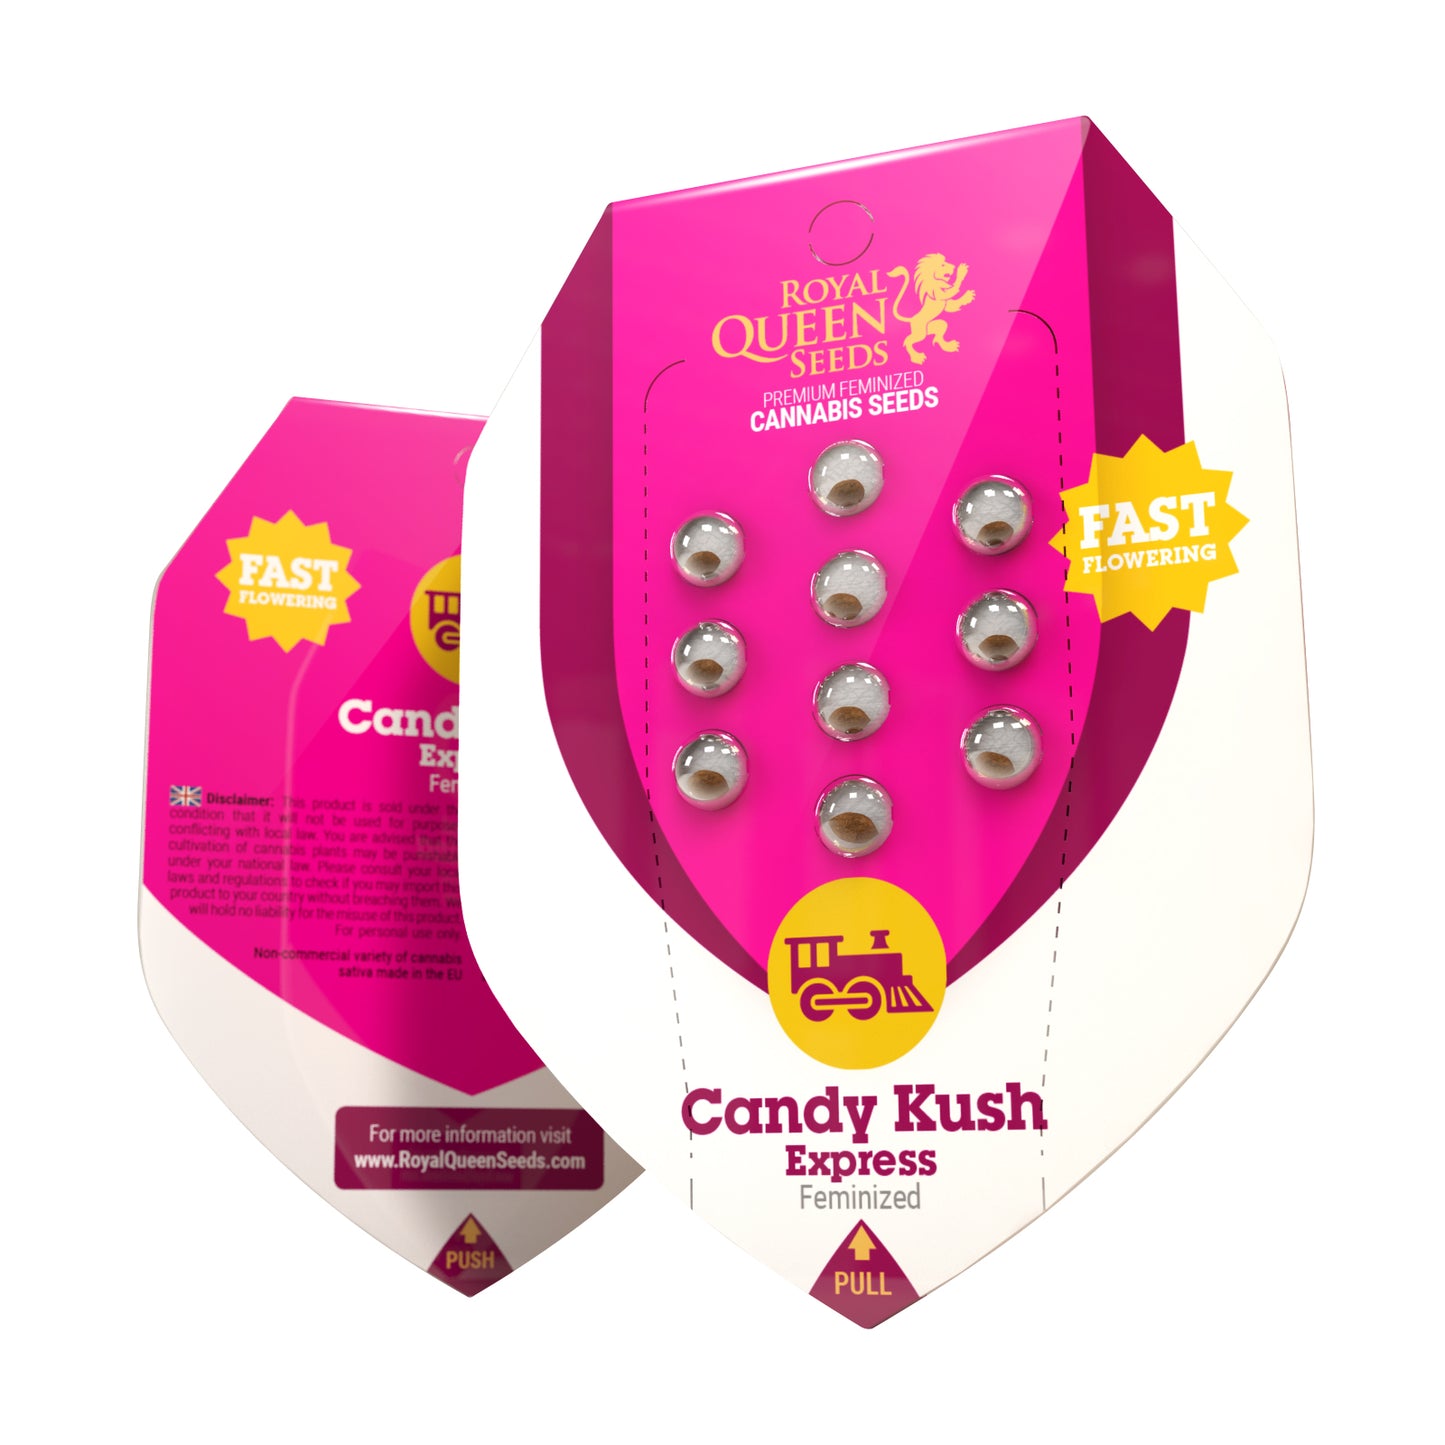 Candy Kush Express - Fast - RQS - Feminized